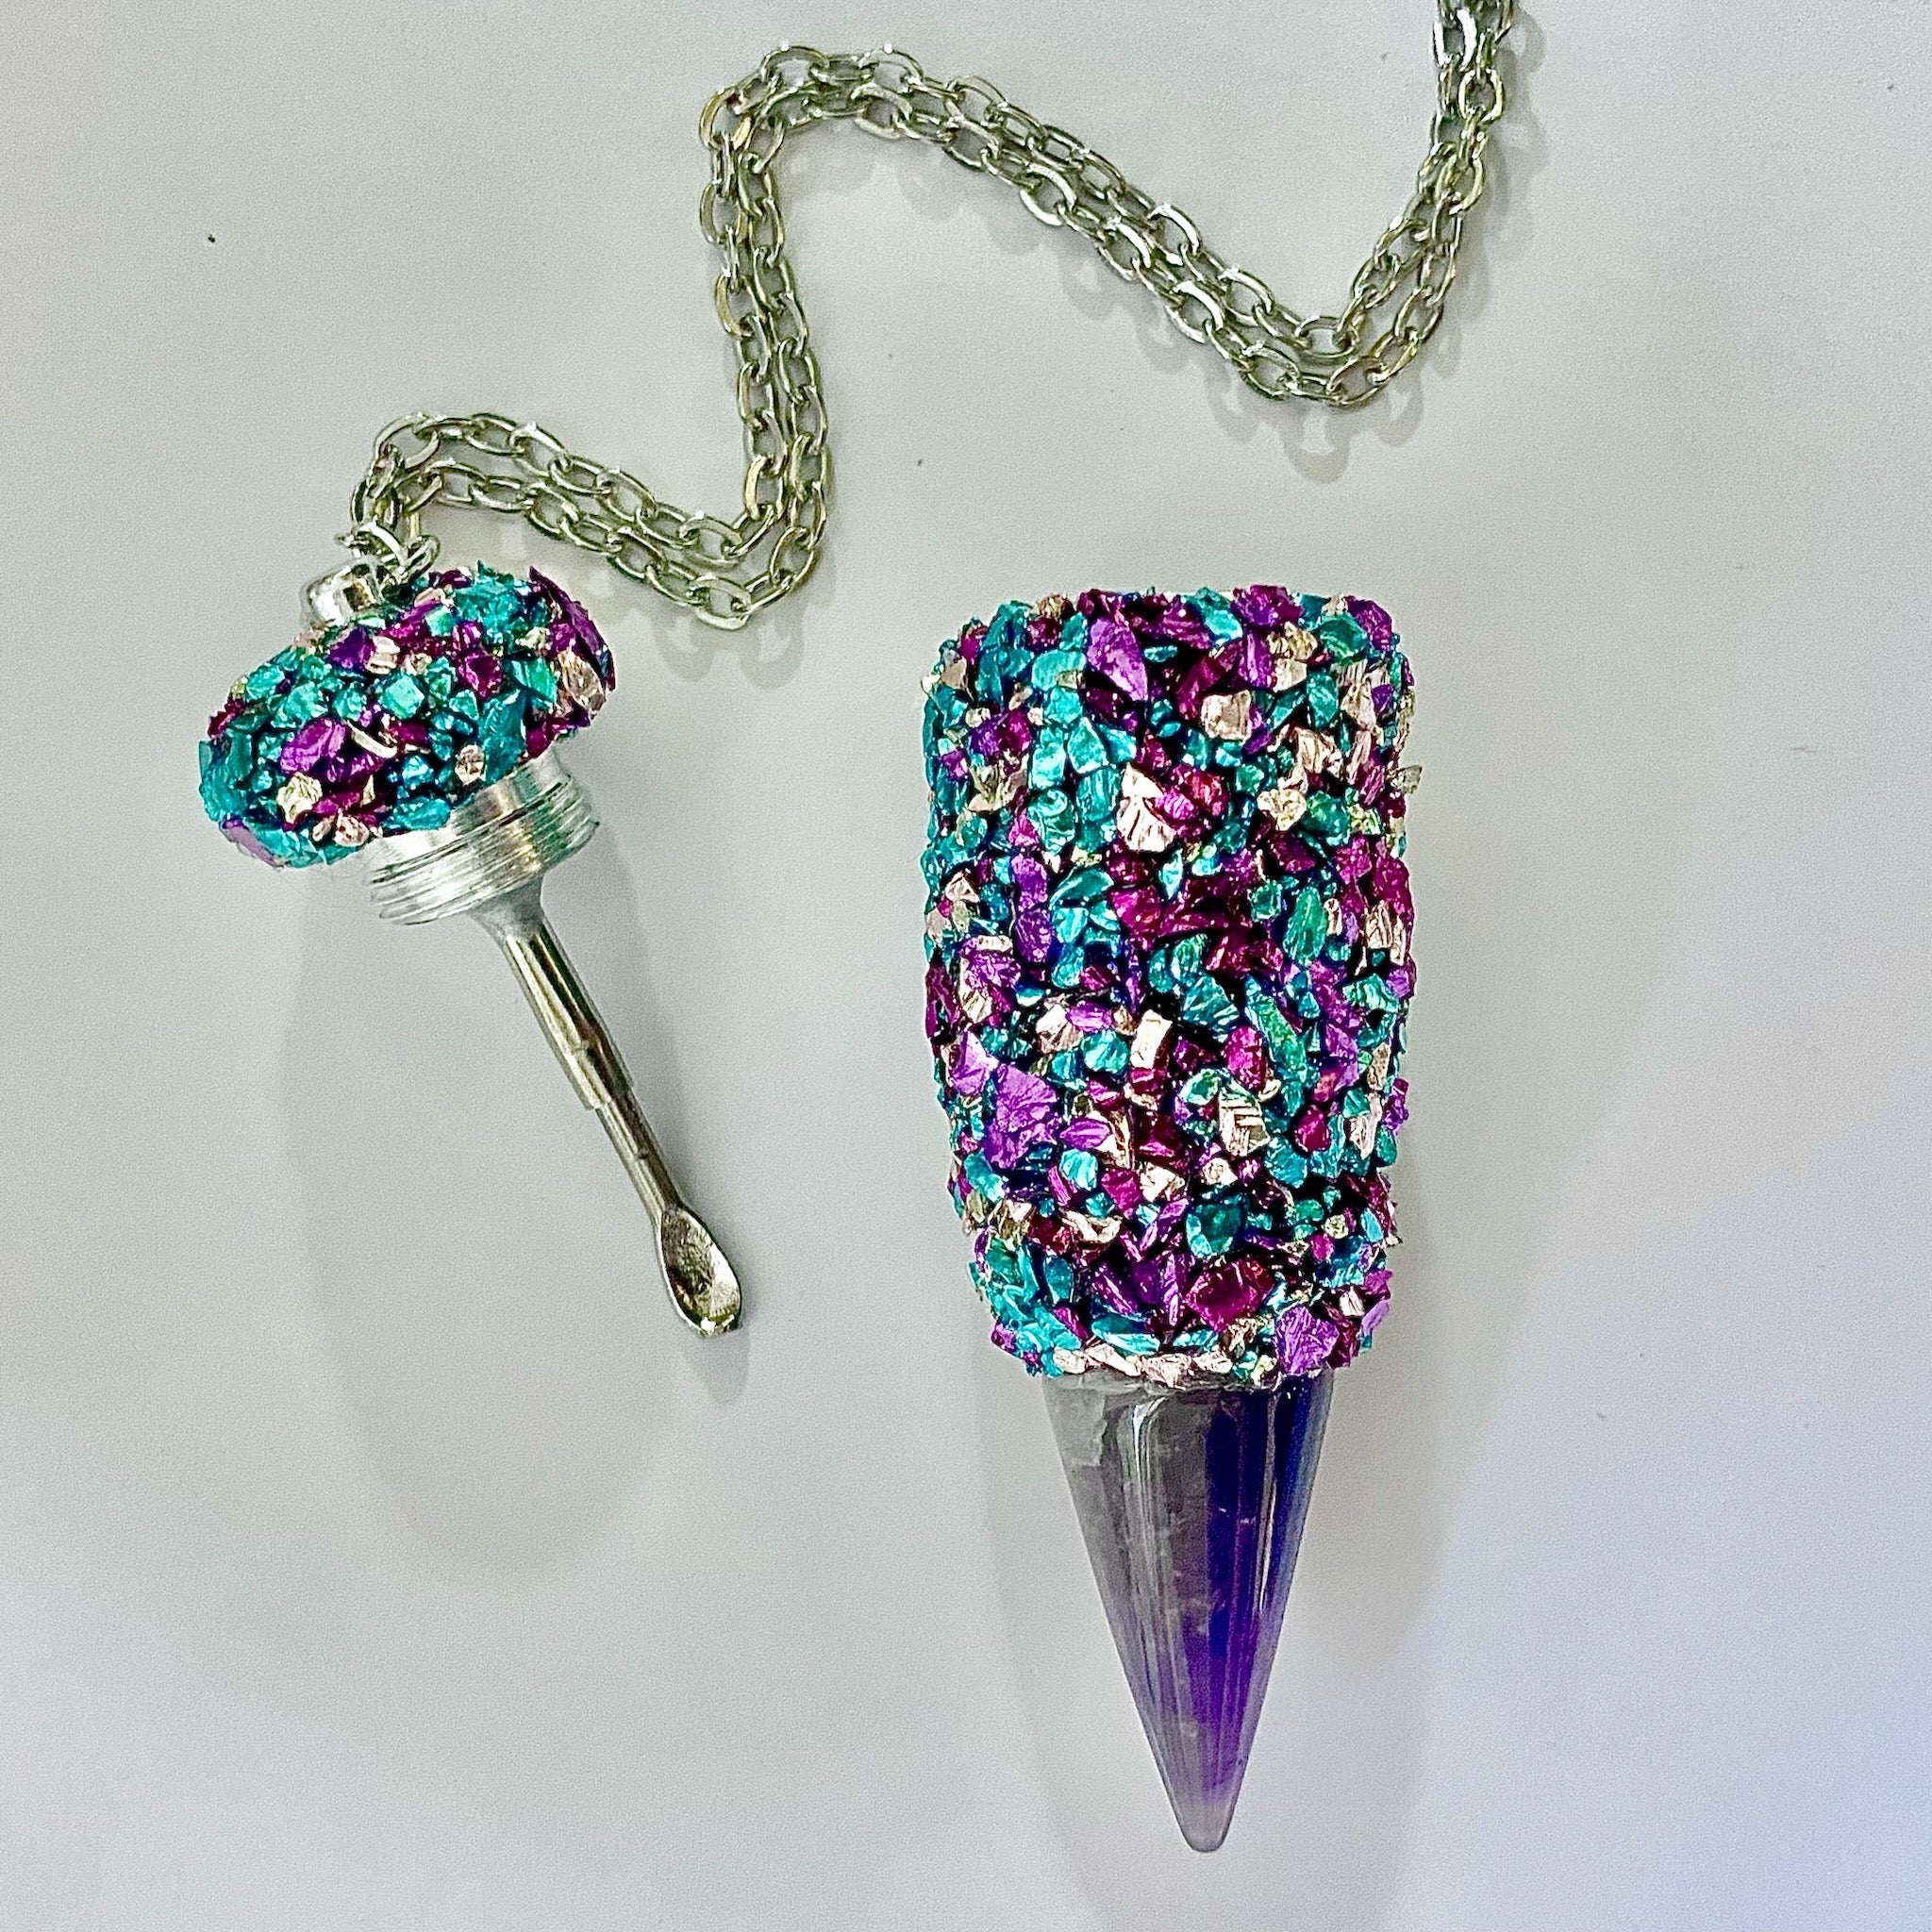 Stash Necklace With Spoon - Dark Purple